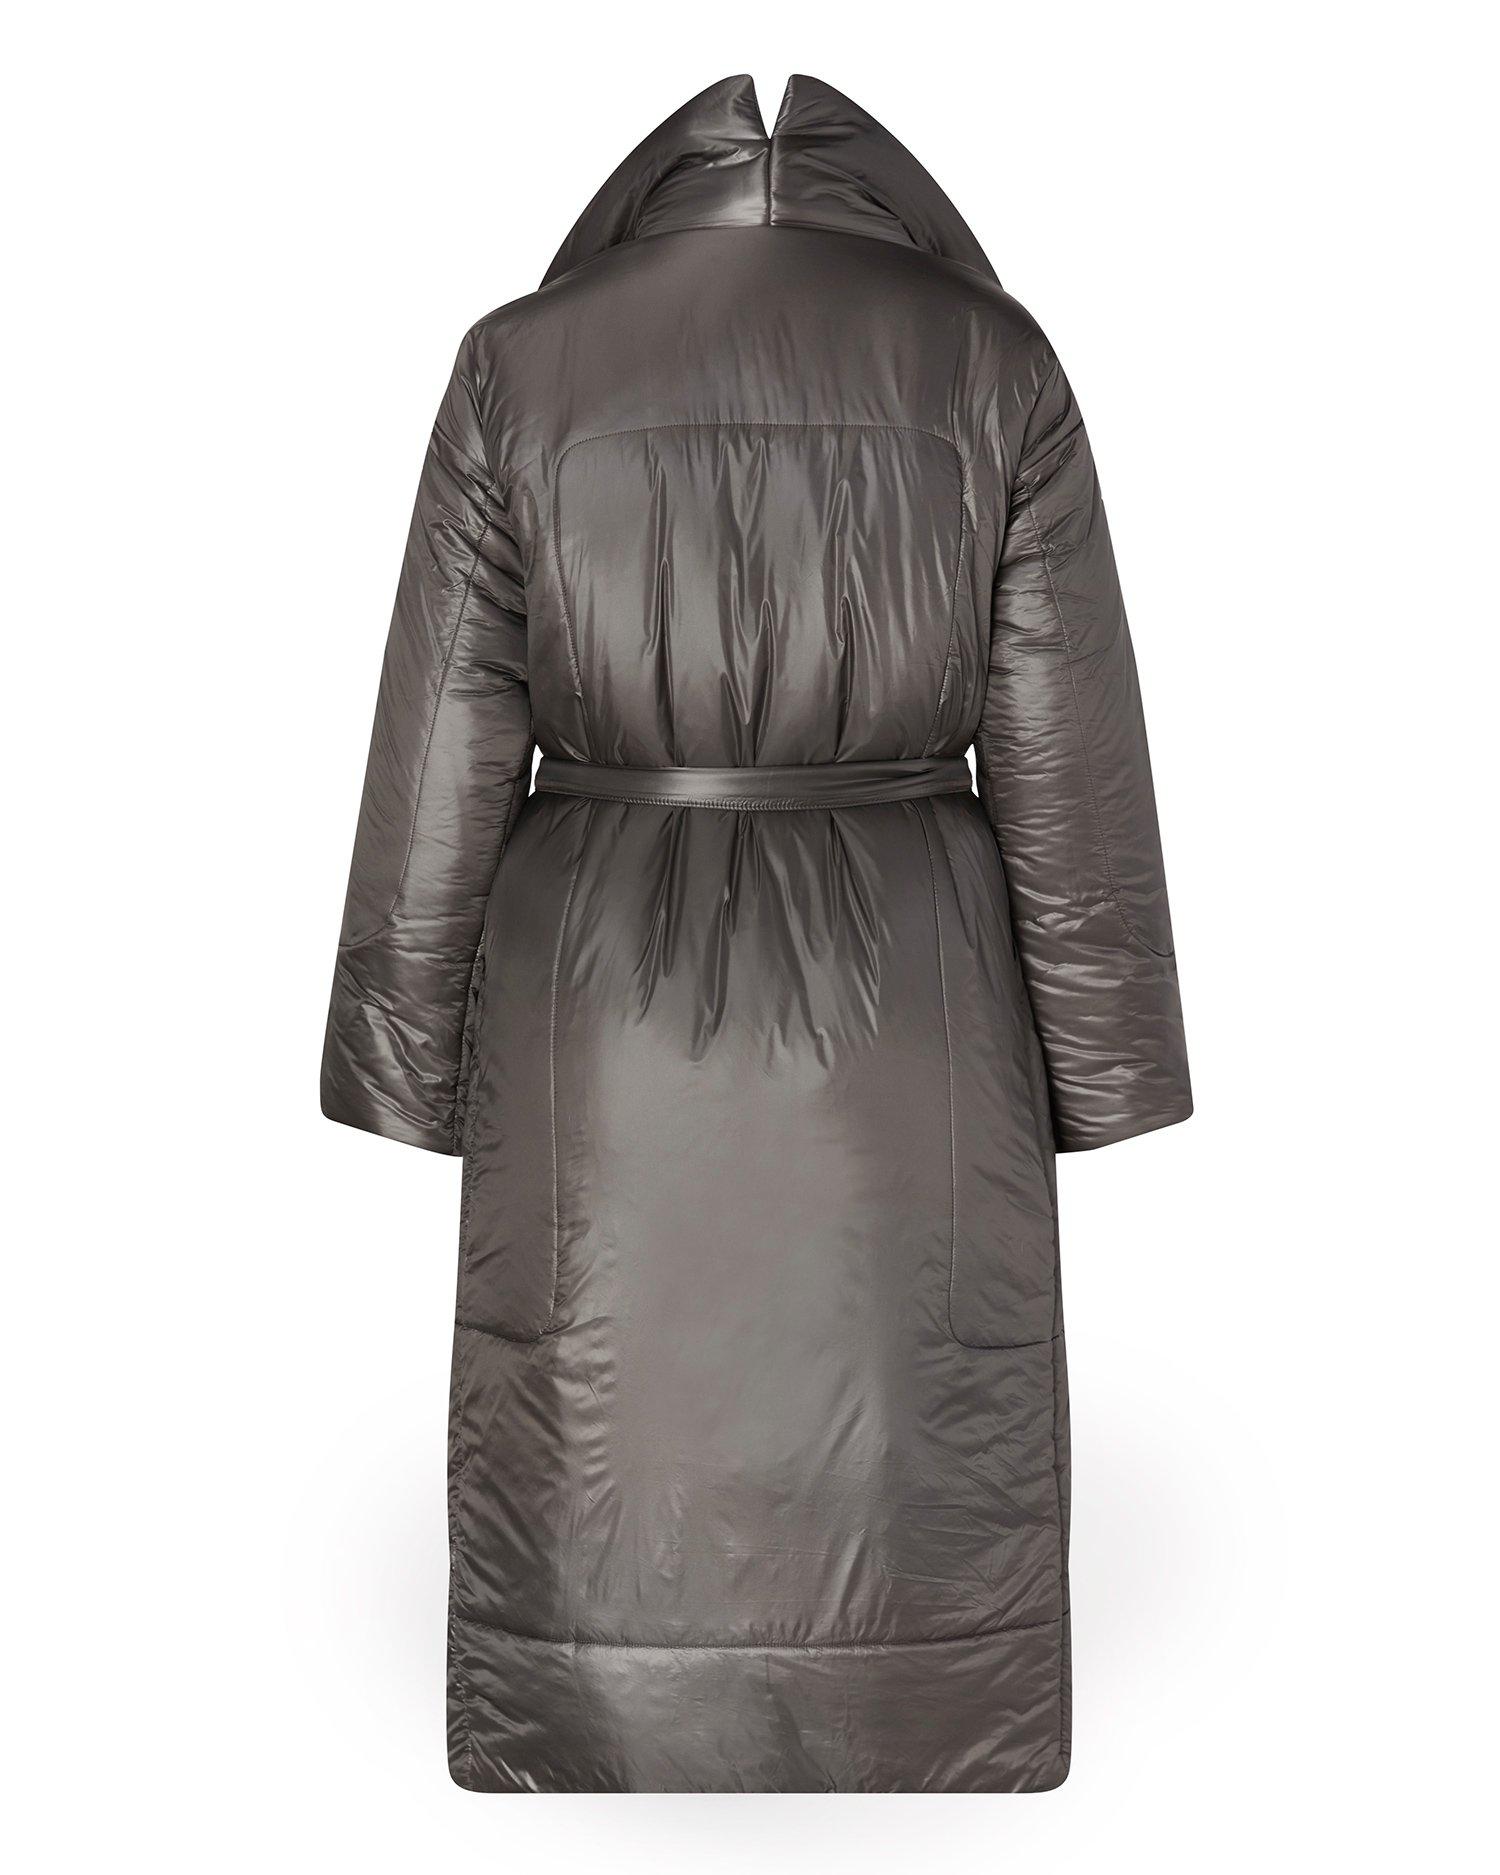 Norma Kamali Synthetic Sleeping Bag Coat in Gray - Lyst